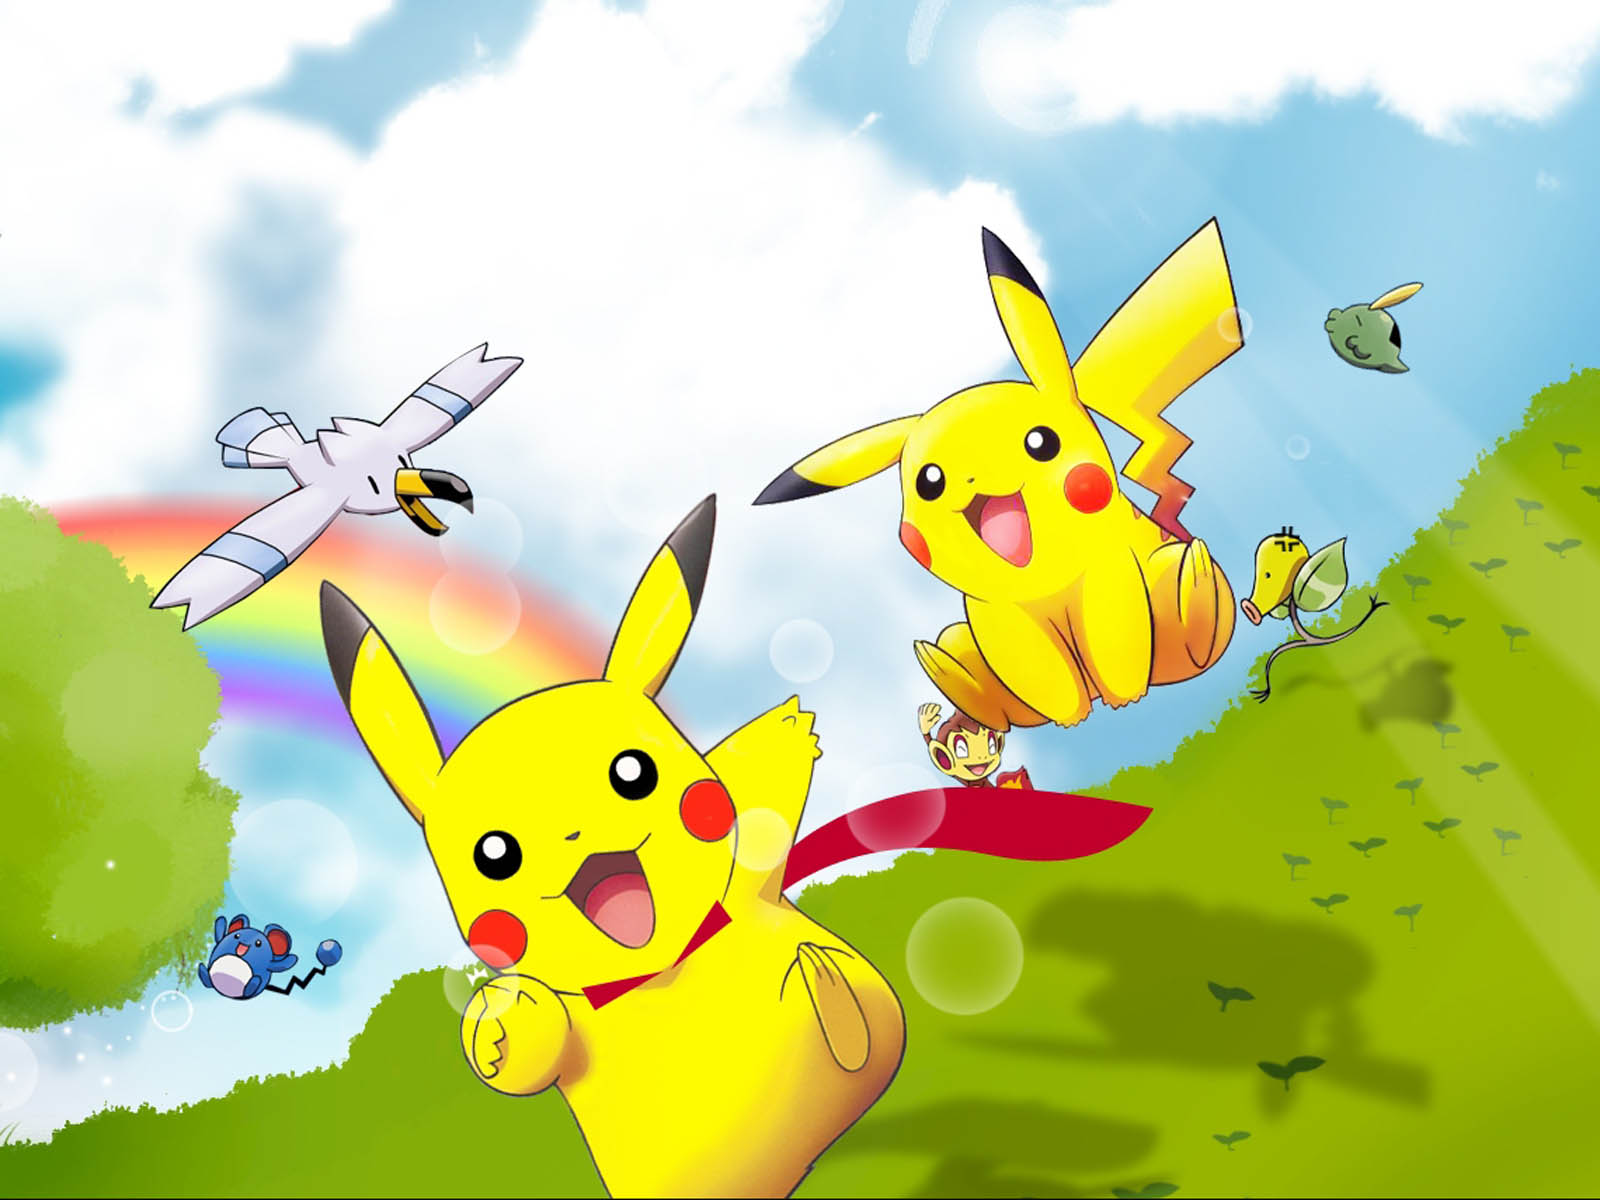 Pokemon Pikachu Image